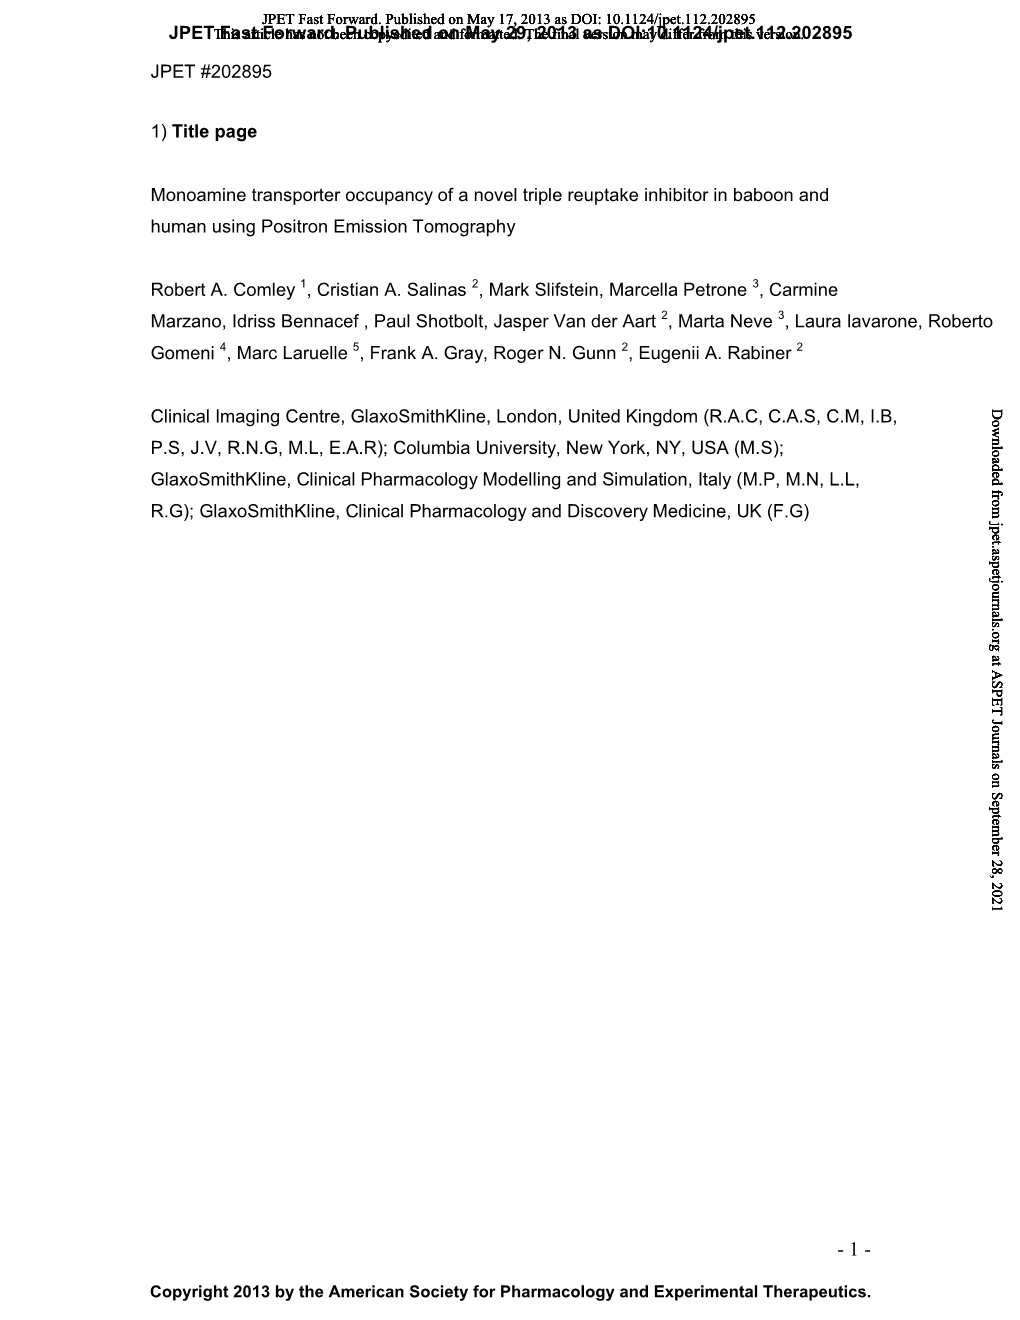 JPET #202895 1) Title Page Monoamine Transporter Occupancy